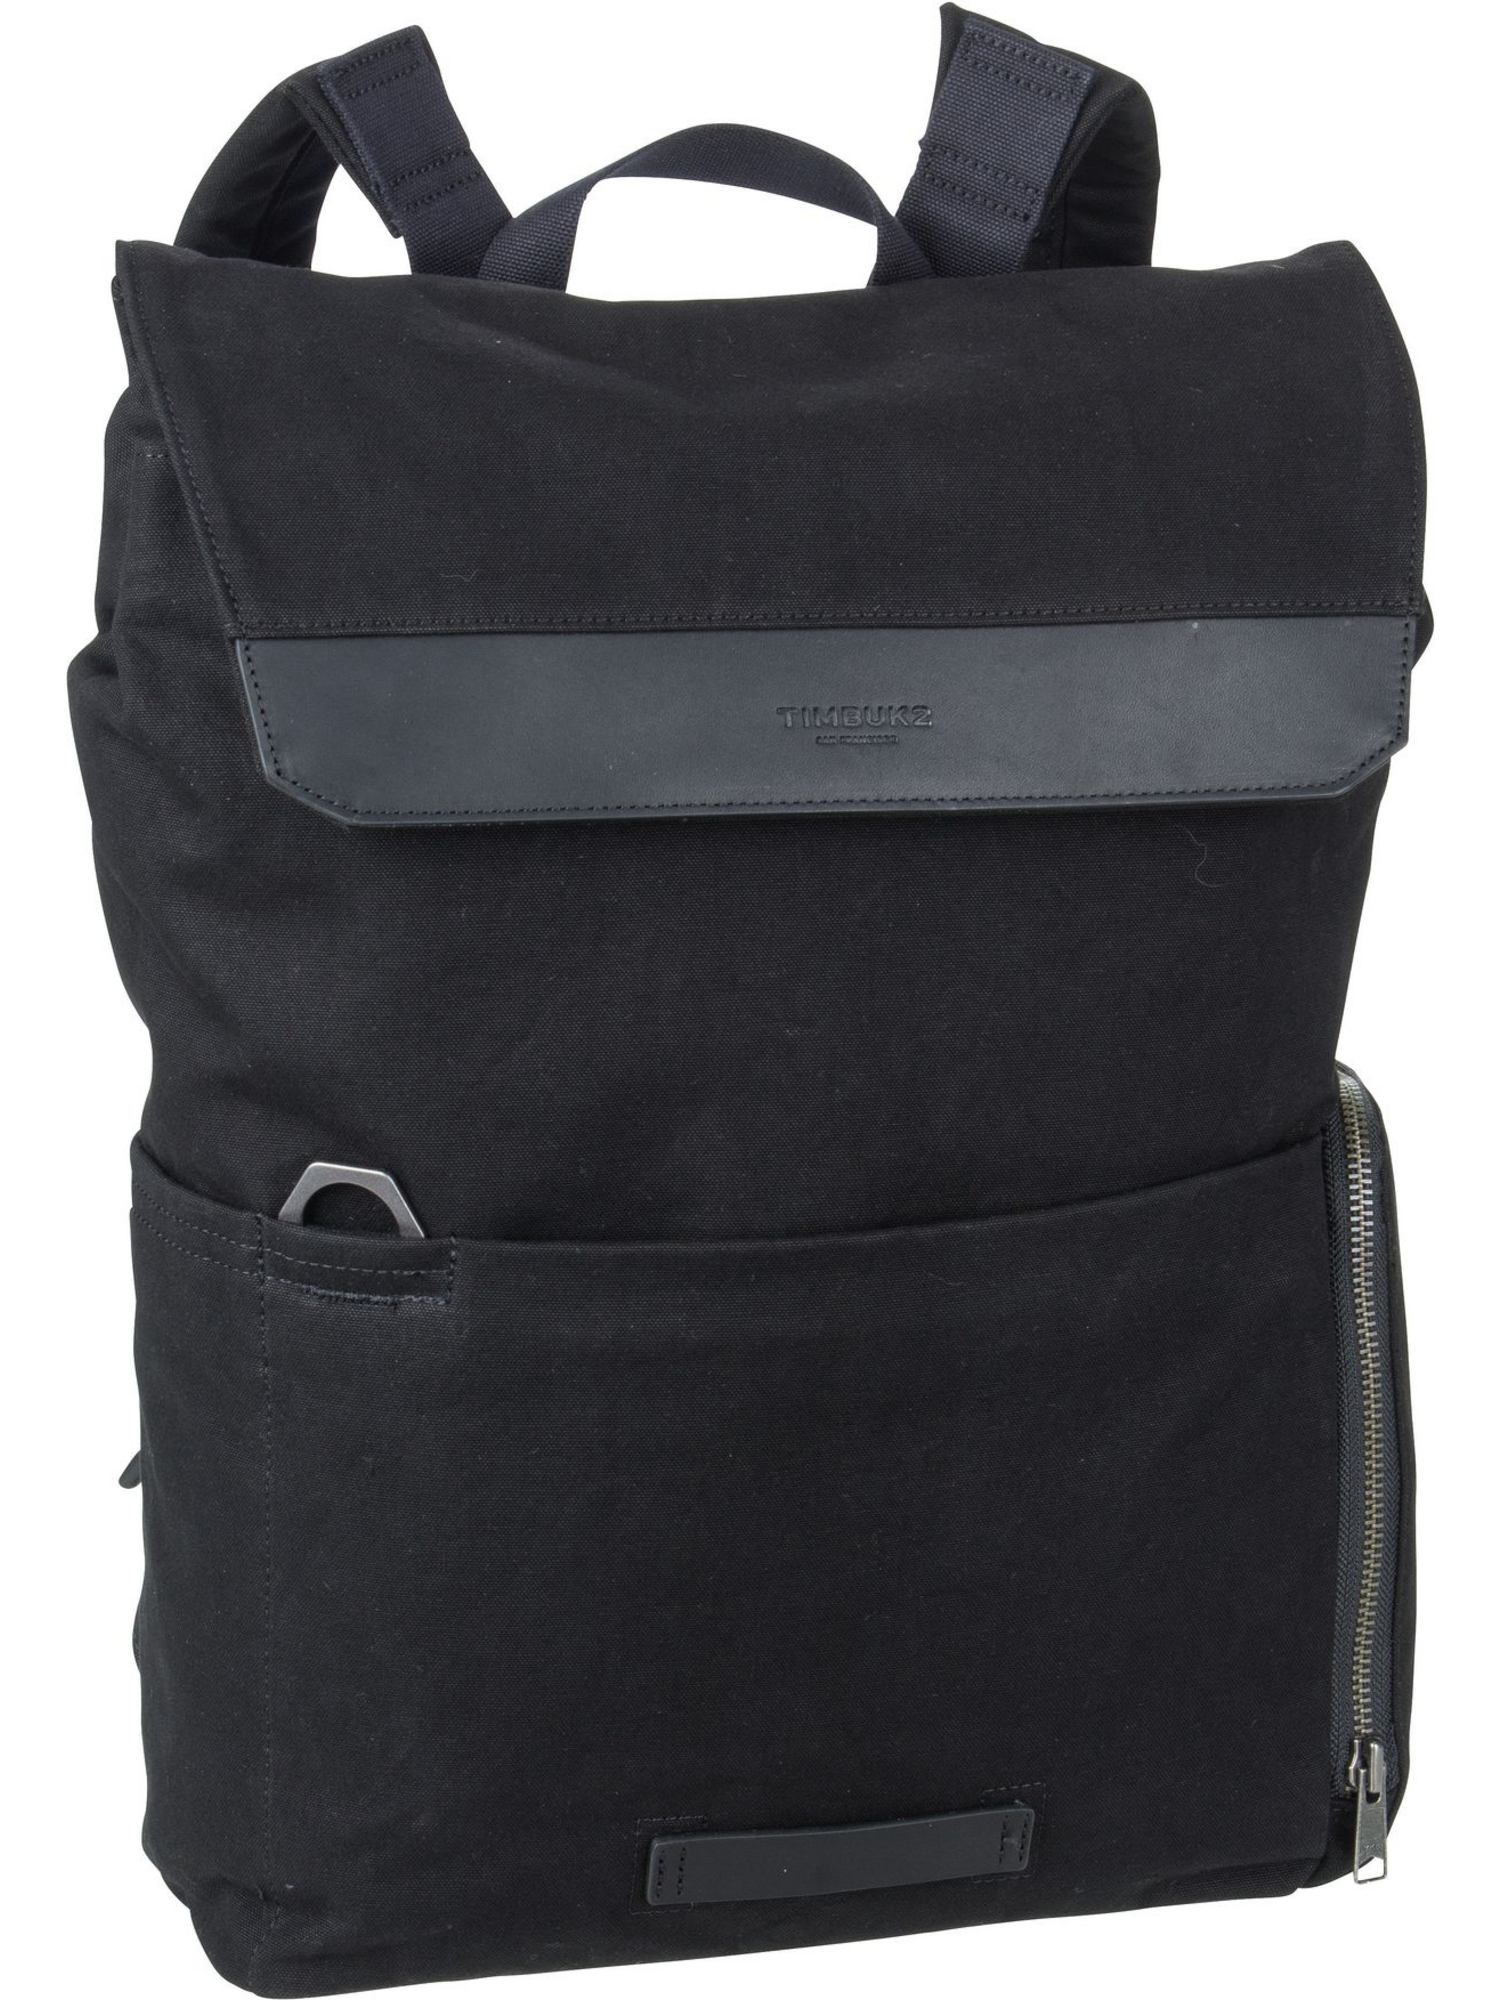 Рюкзак Timbuk2/Backpack Foundry Pack, угольно черный